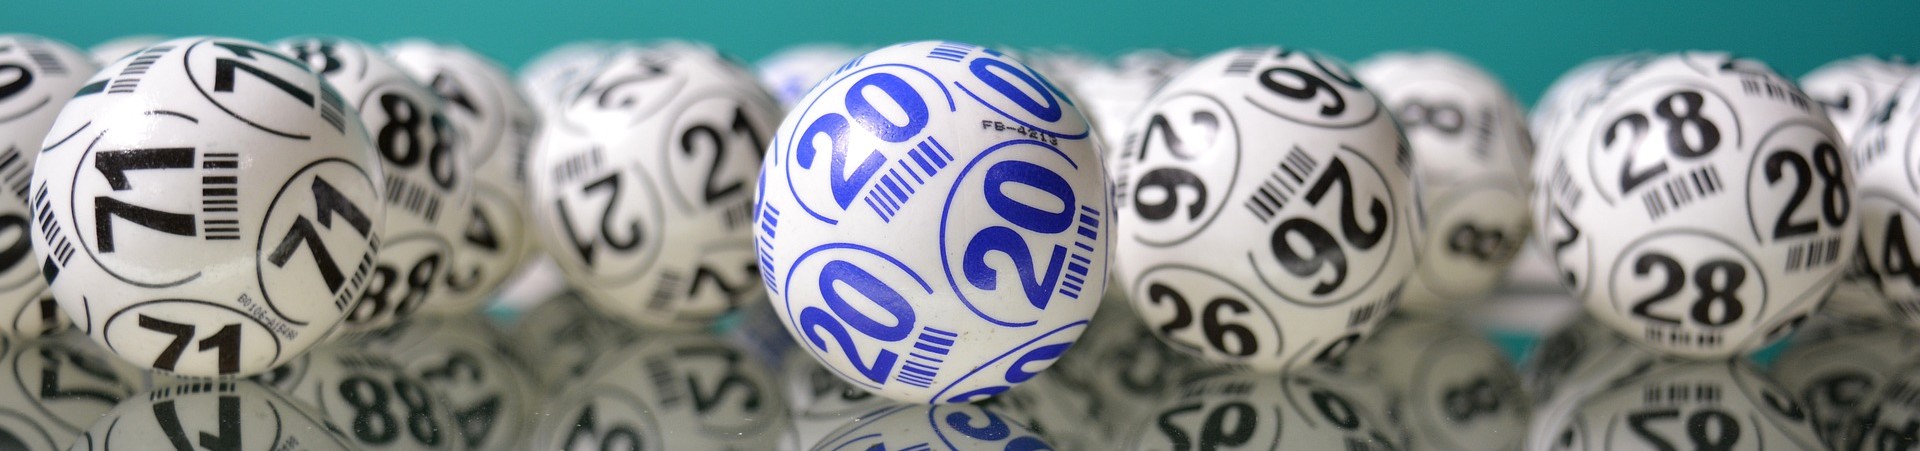 London Bingo Clubs Suffering Decline